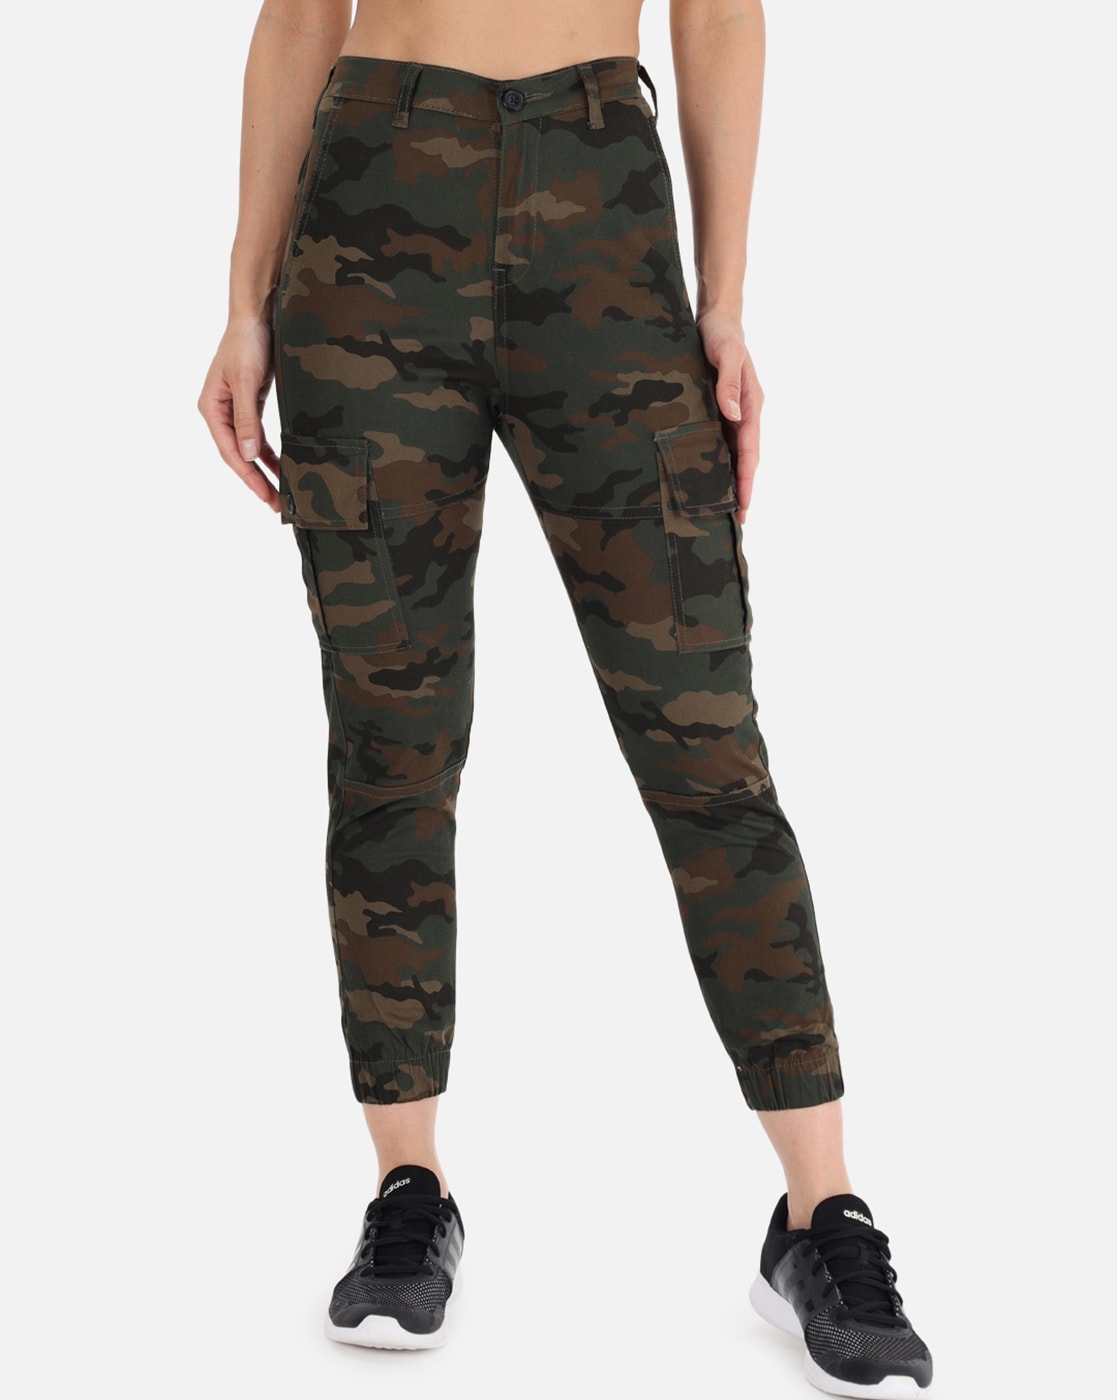 Women Camouflage Pants Camo Casual Cargo Joggers Military Army Harem  Trousers - Walmart.com